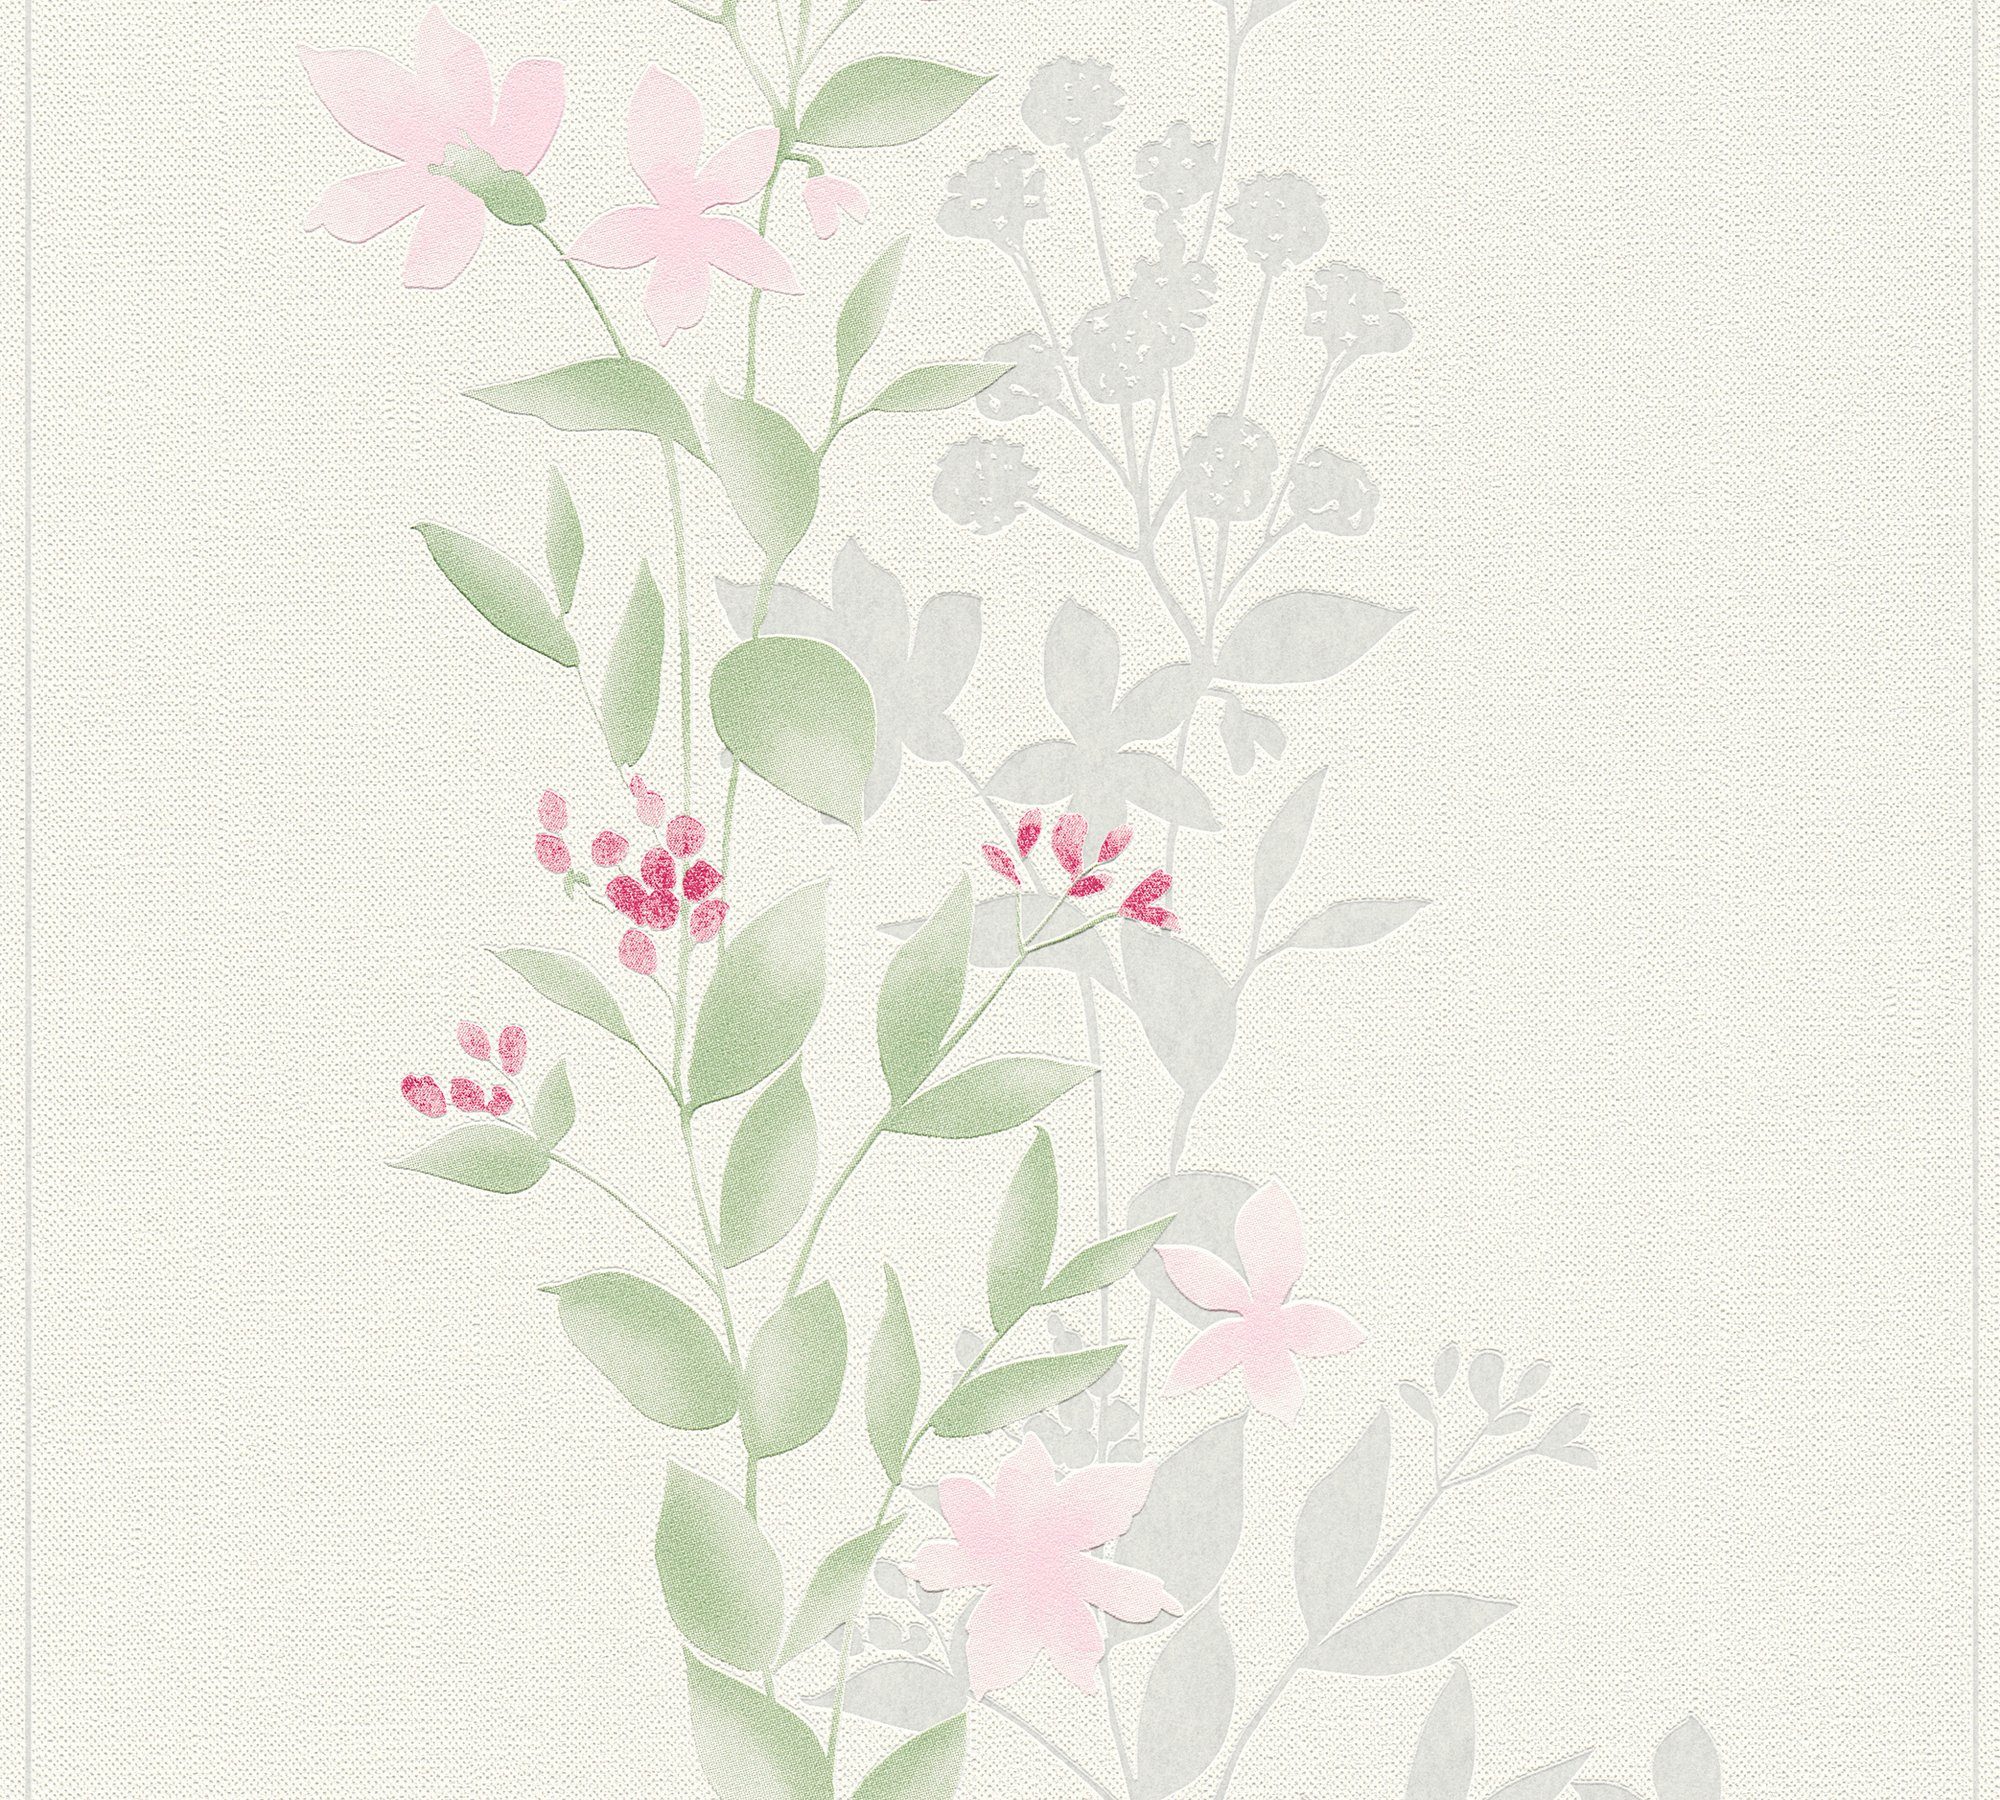 Vliestapete bunt/grau/grün A.S. Blooming Création Tapete strukturiert, Blumen floral, floral,